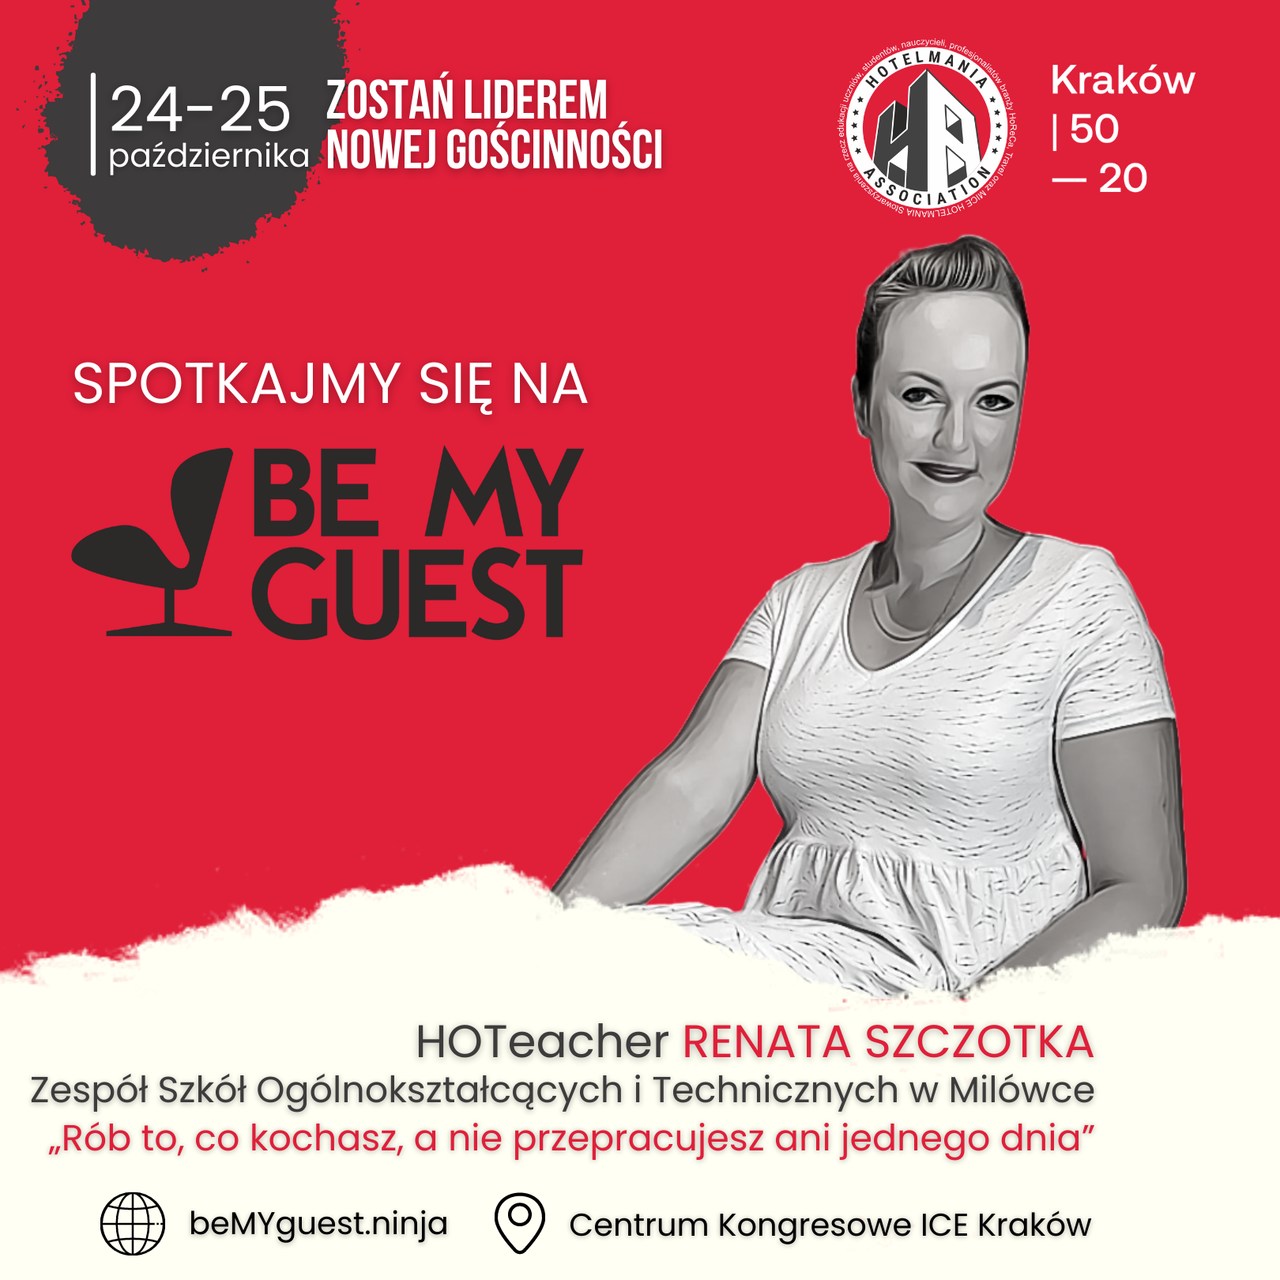 Be my Guest hoteacher Renata Szczotka